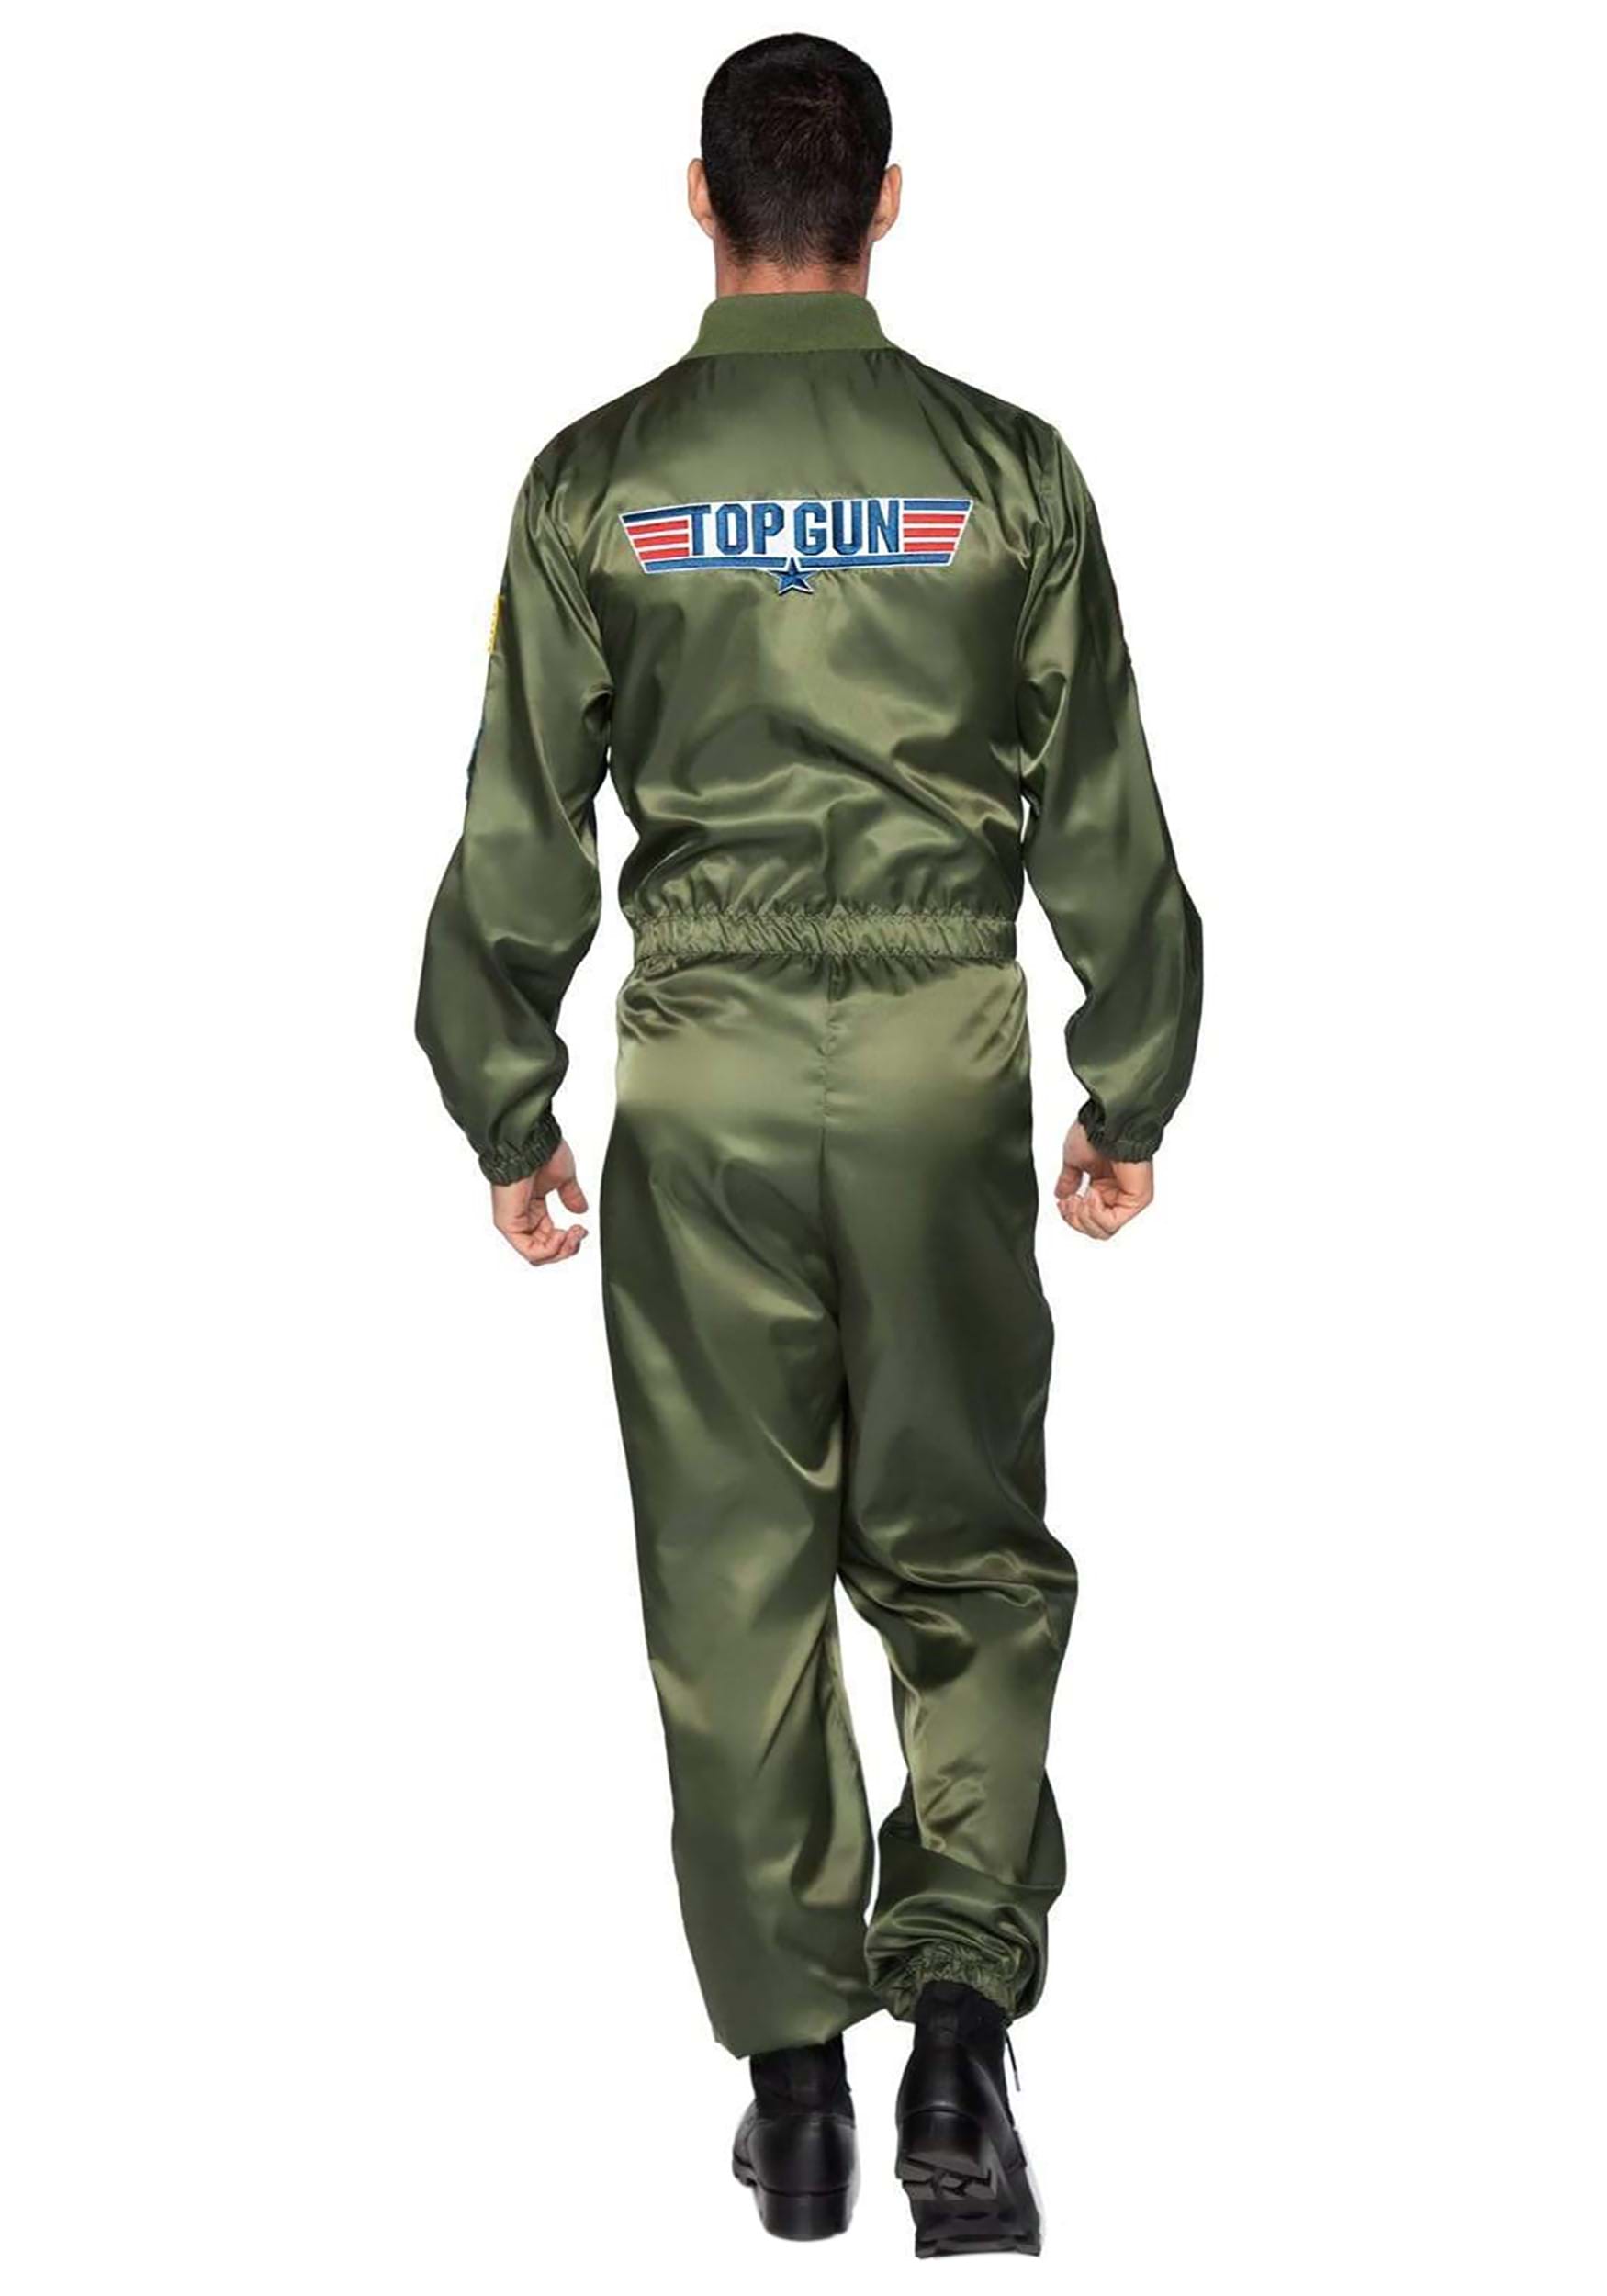 Top Gun Men's Parachute Flight Suit Costume